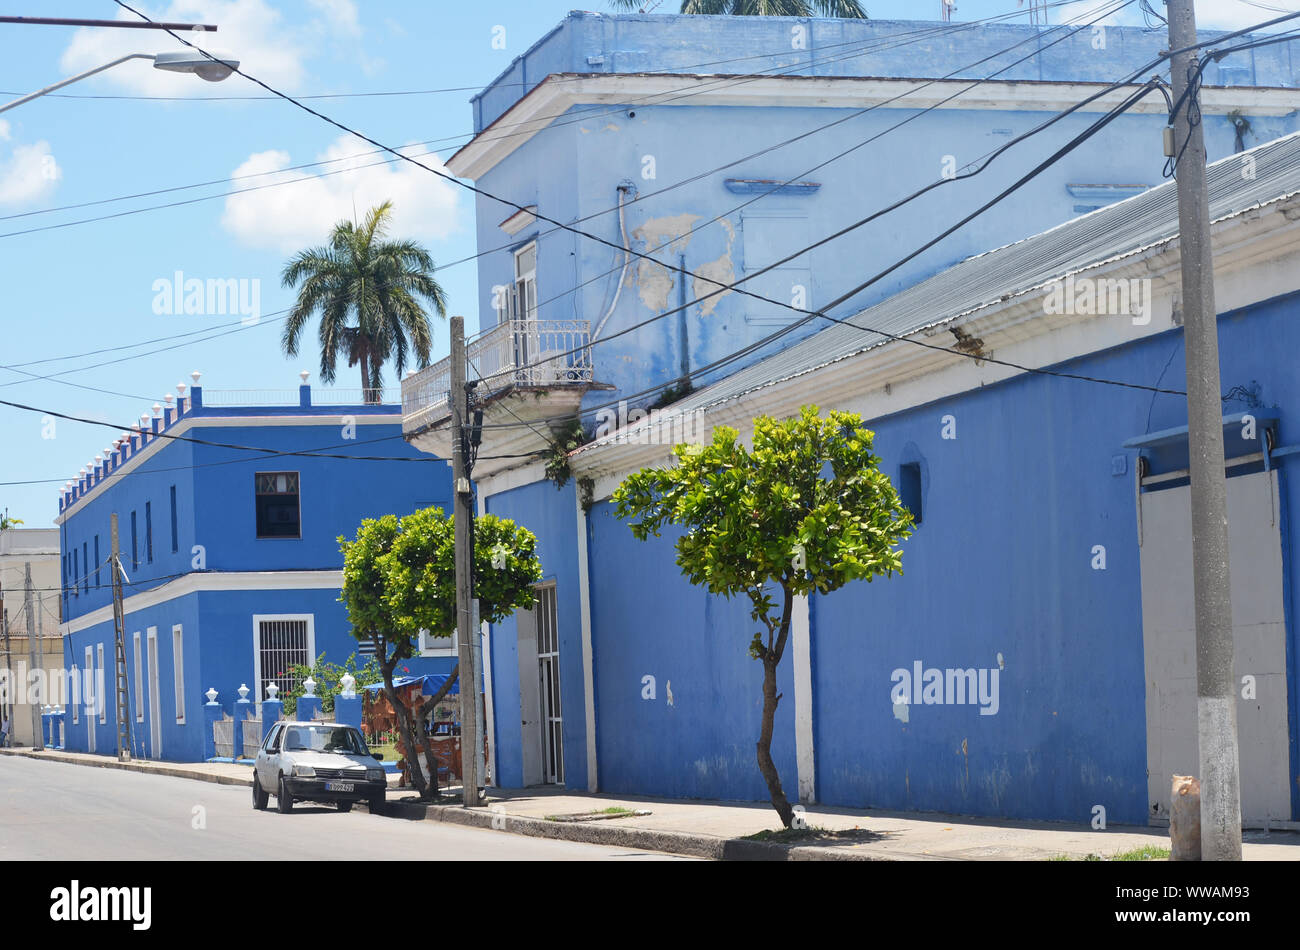 Período Especial De Cuba Fotos e Imágenes de stock - Página 4 - Alamy